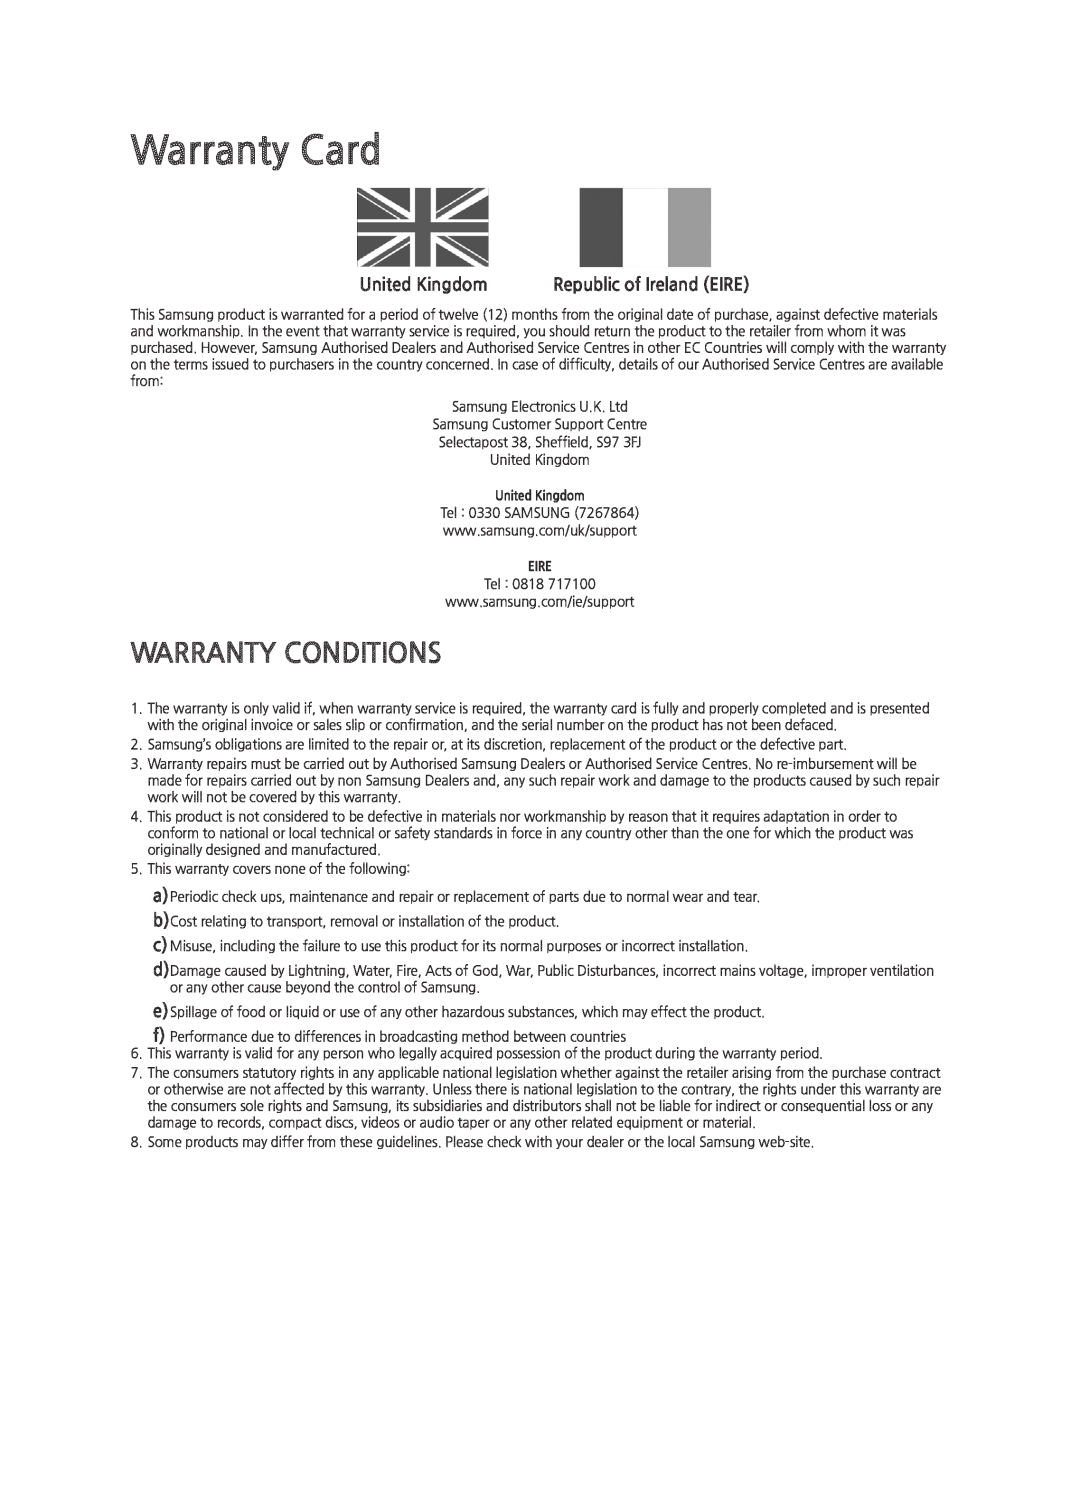 Samsung UE65JU7500TXZT, UE48JU7500TXXC Warranty Card, Warranty Conditions, Republic of Ireland EIRE, United Kingdom, Eire 